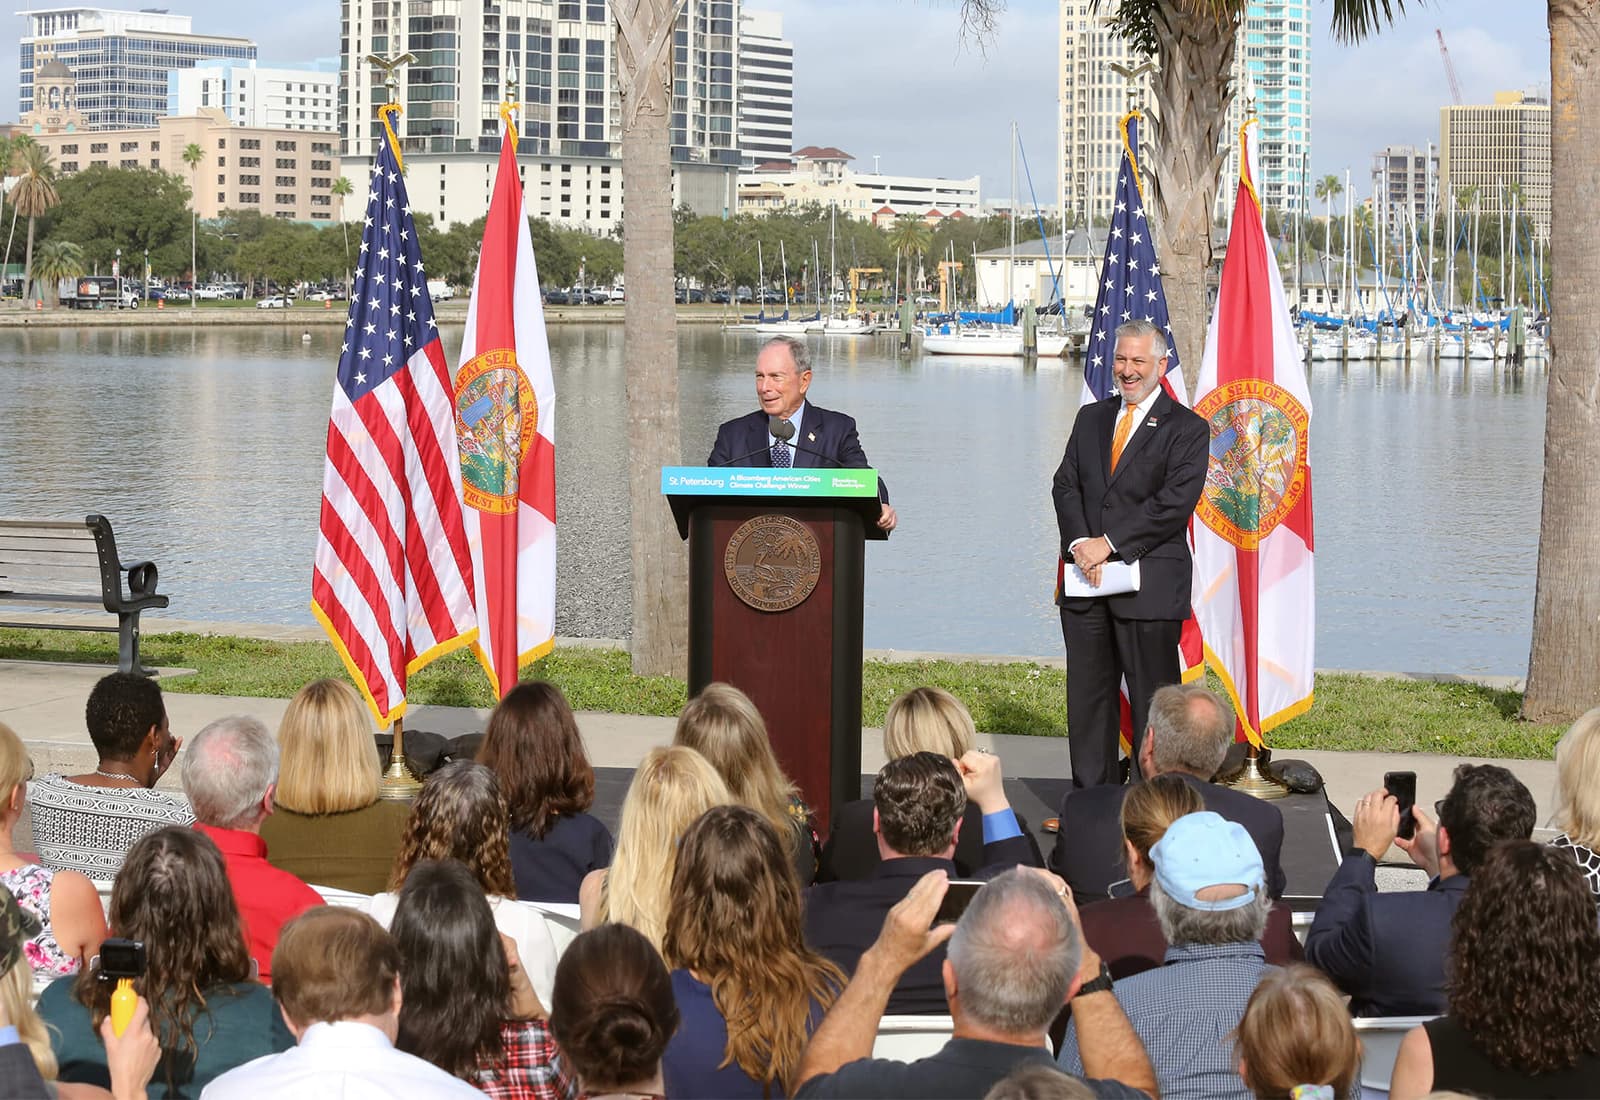 Mike Bloomberg announces St. Petersburg, FL as a winner in the Bloomberg American Cities Climate Challenge alongside Mayor Rick Kriseman.